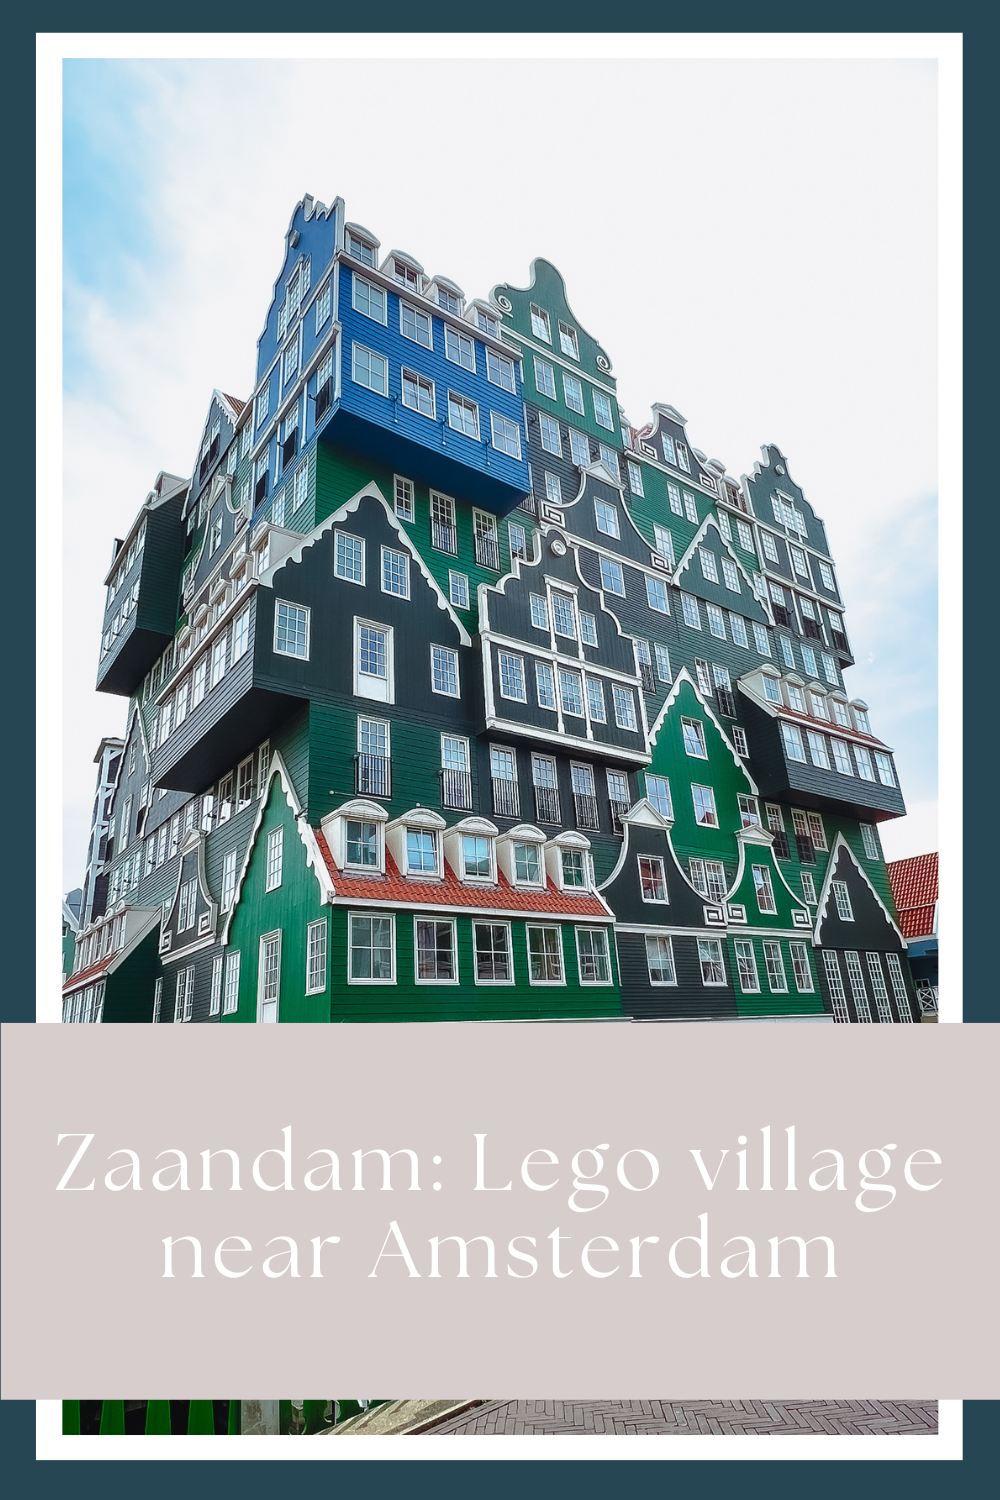 Lego village near Amsterdam by My Next Pin